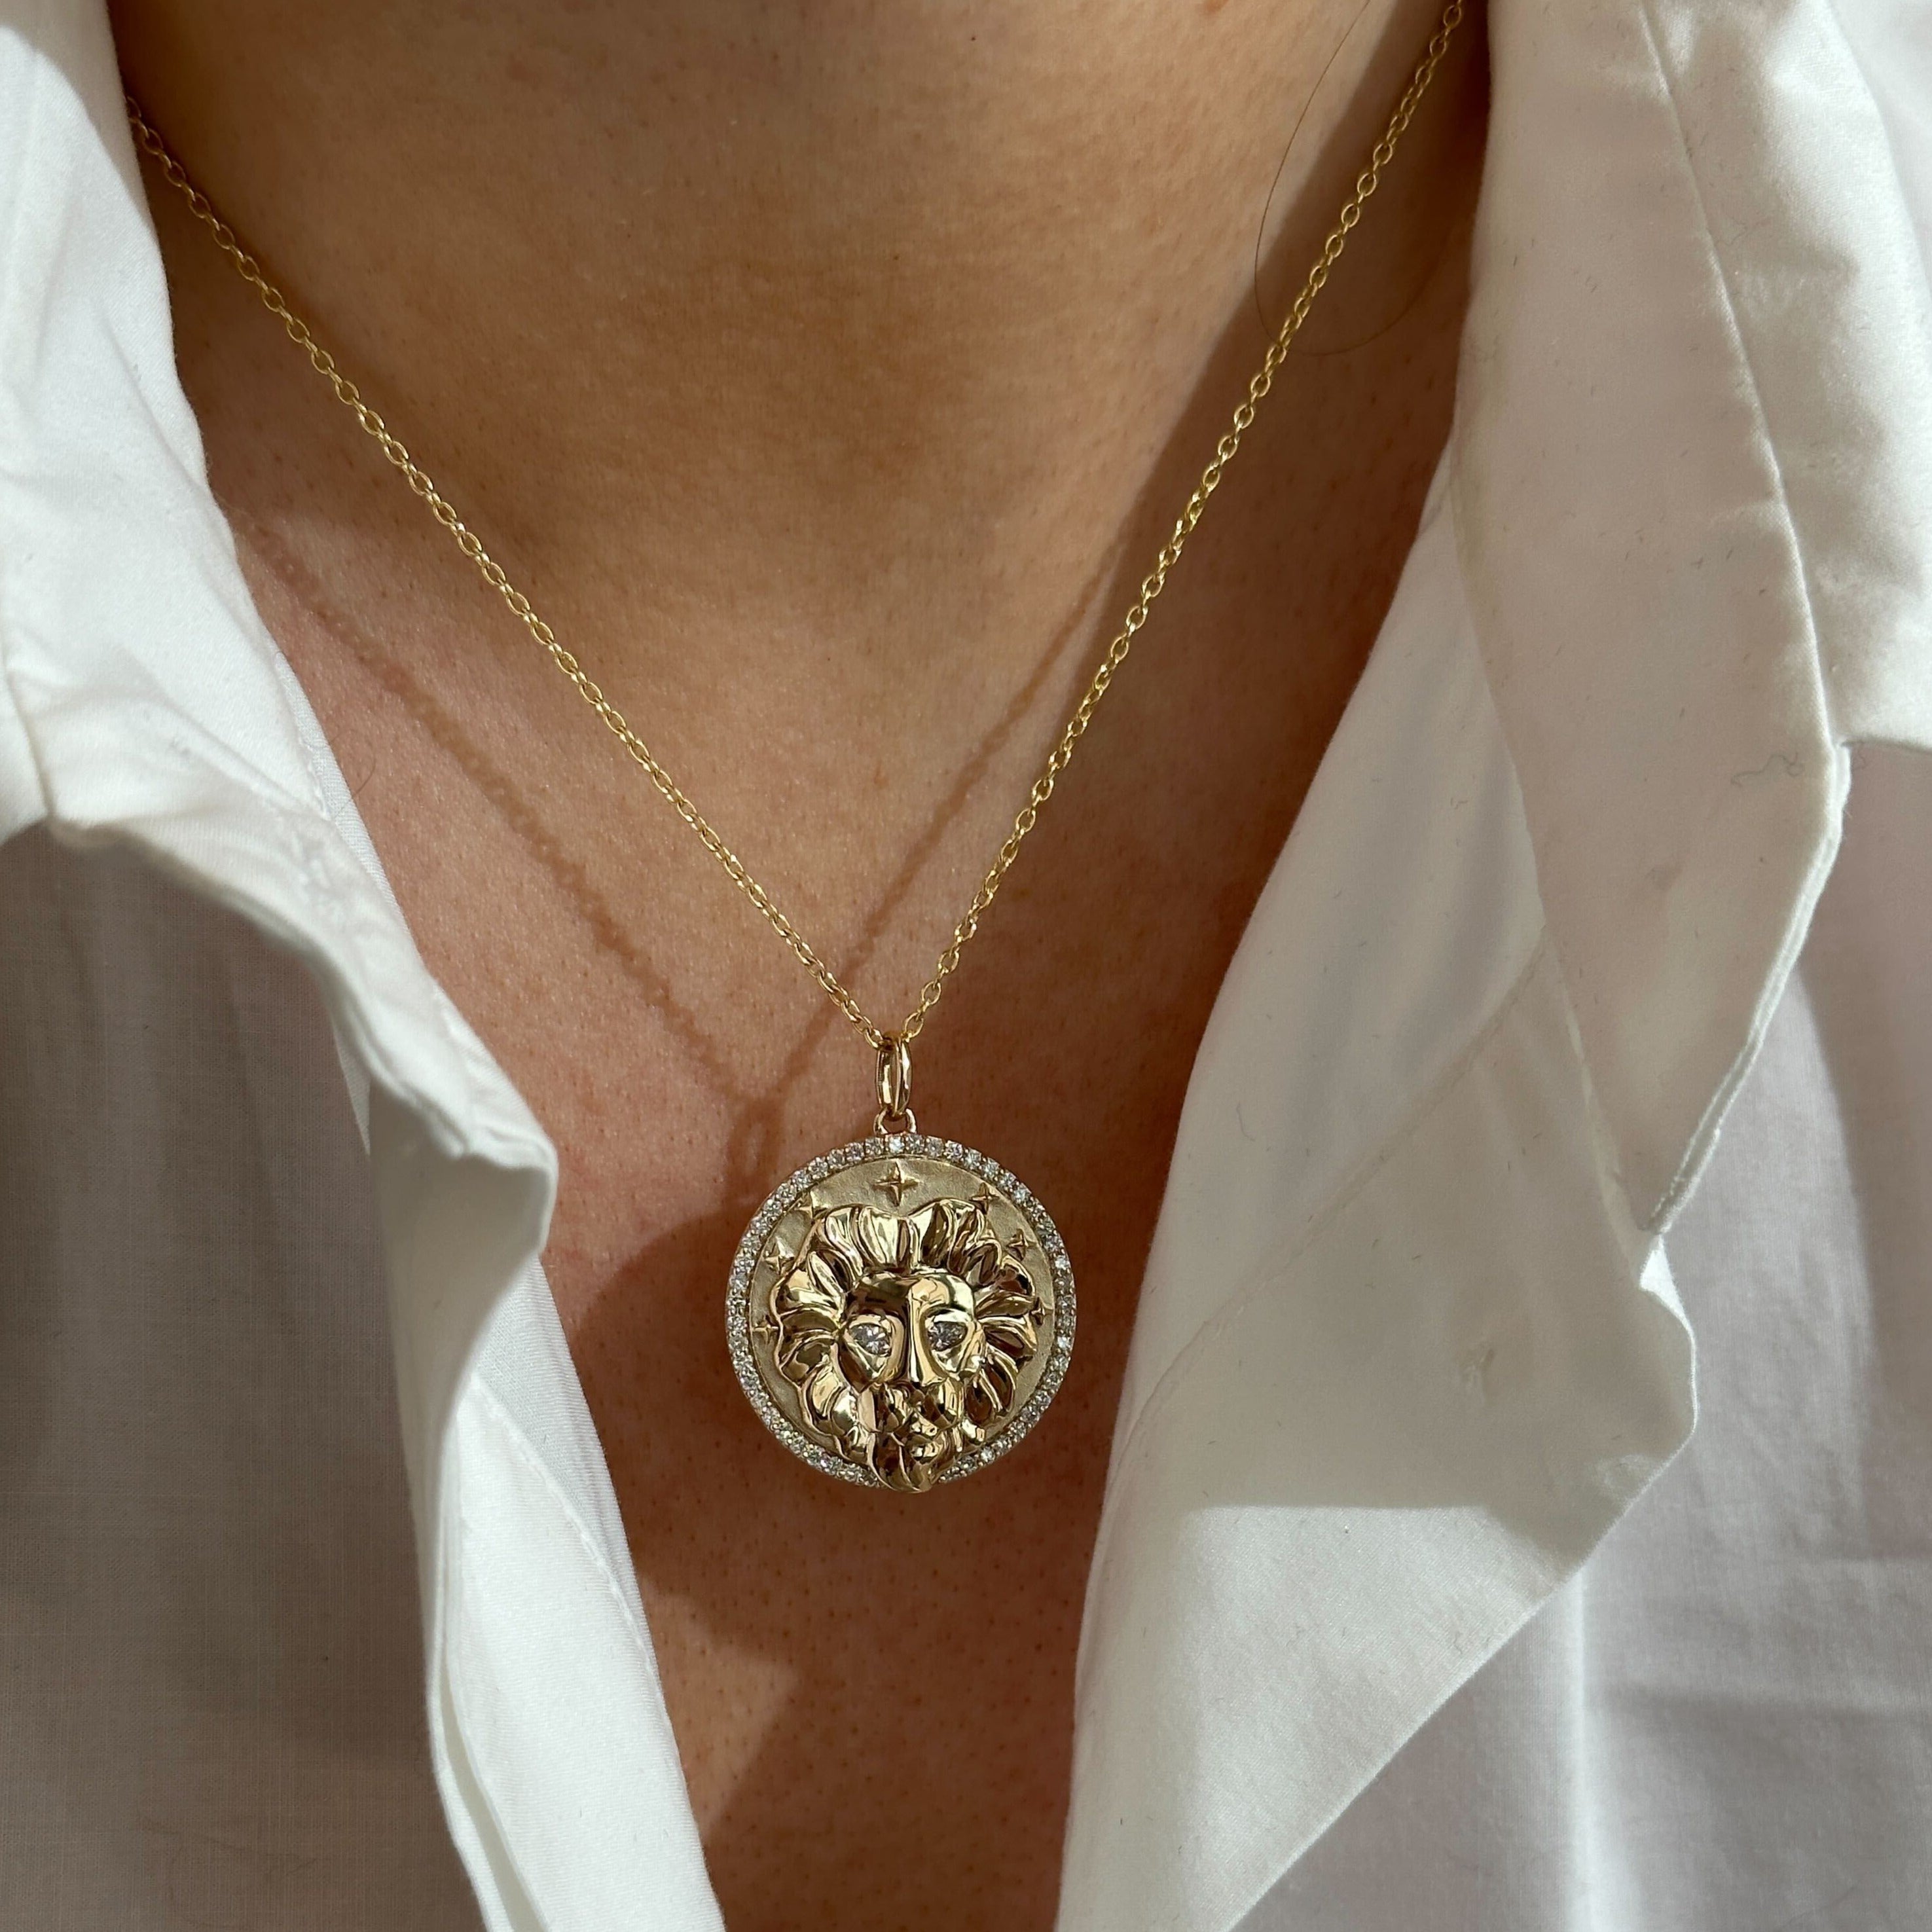 The leo diamond necklace - Gem